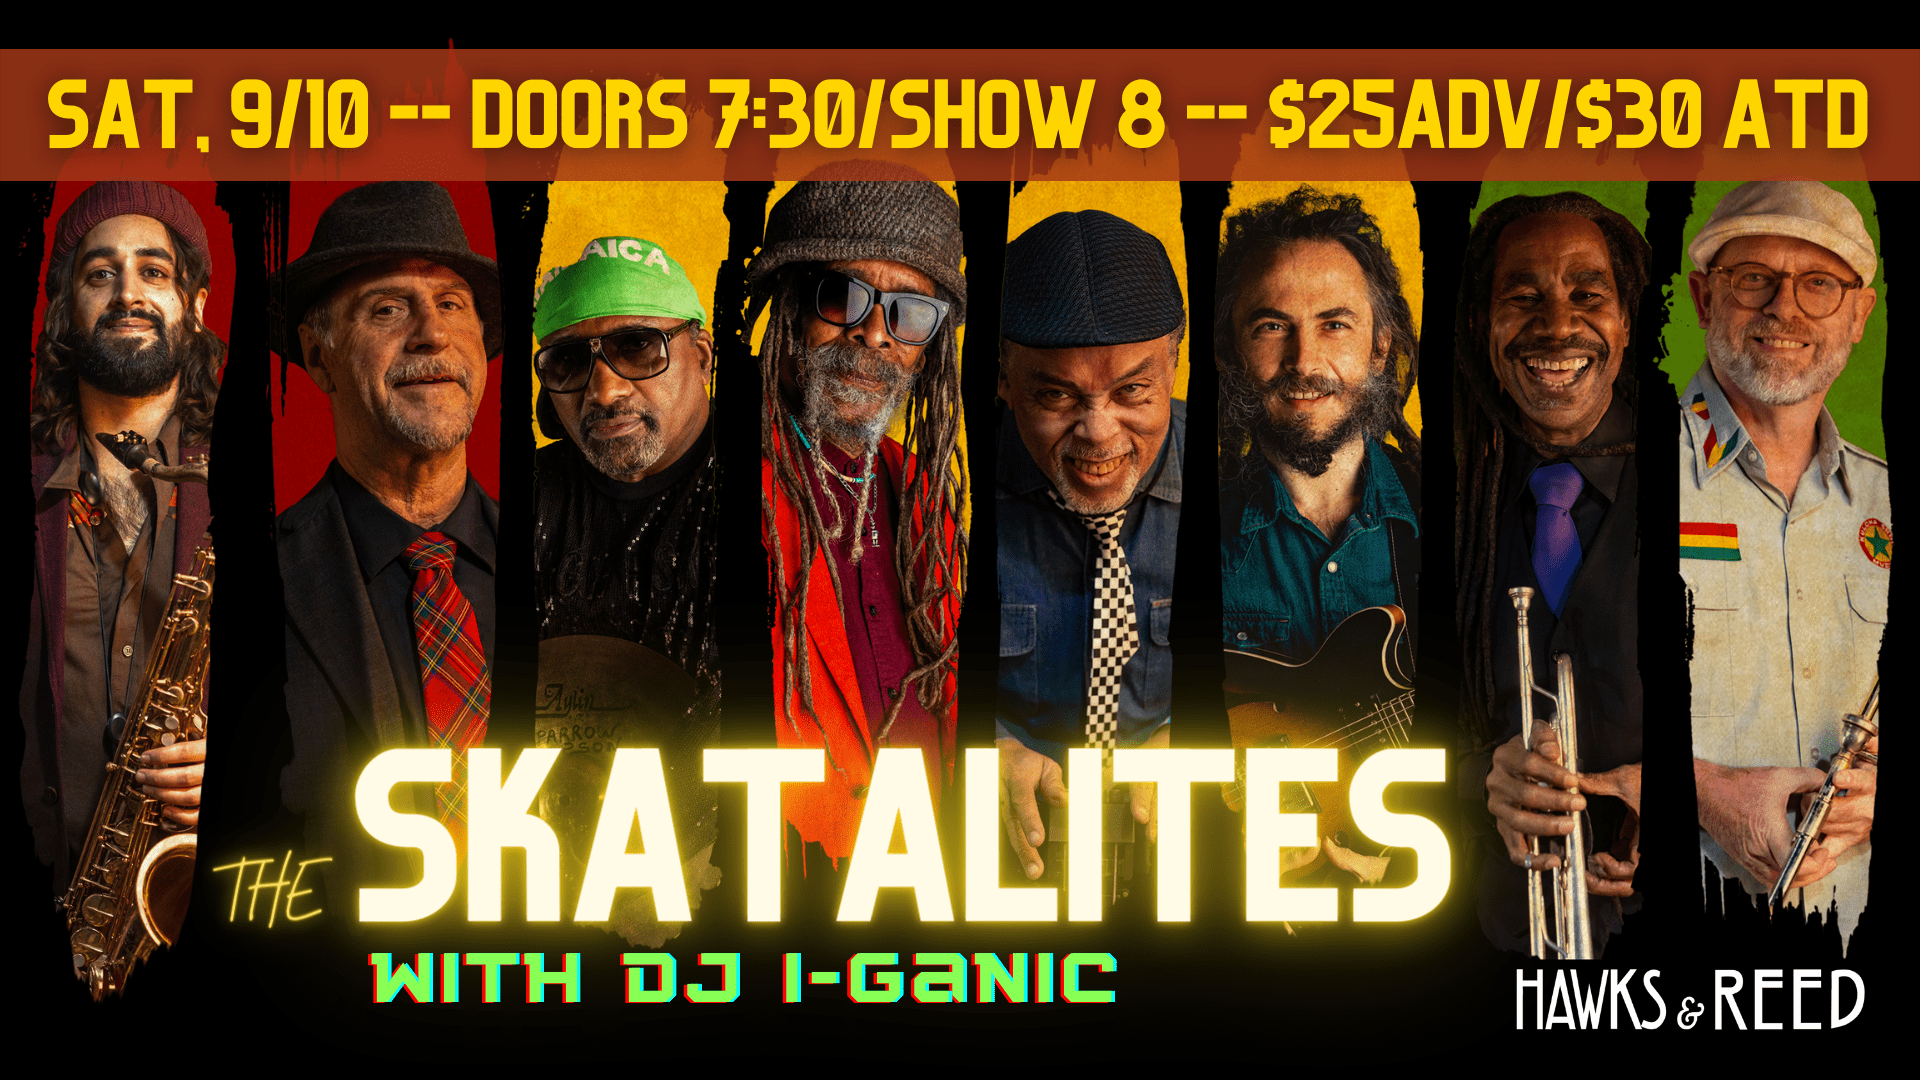 The Skatalites with DJ I-Ganic at Hawks & Reed